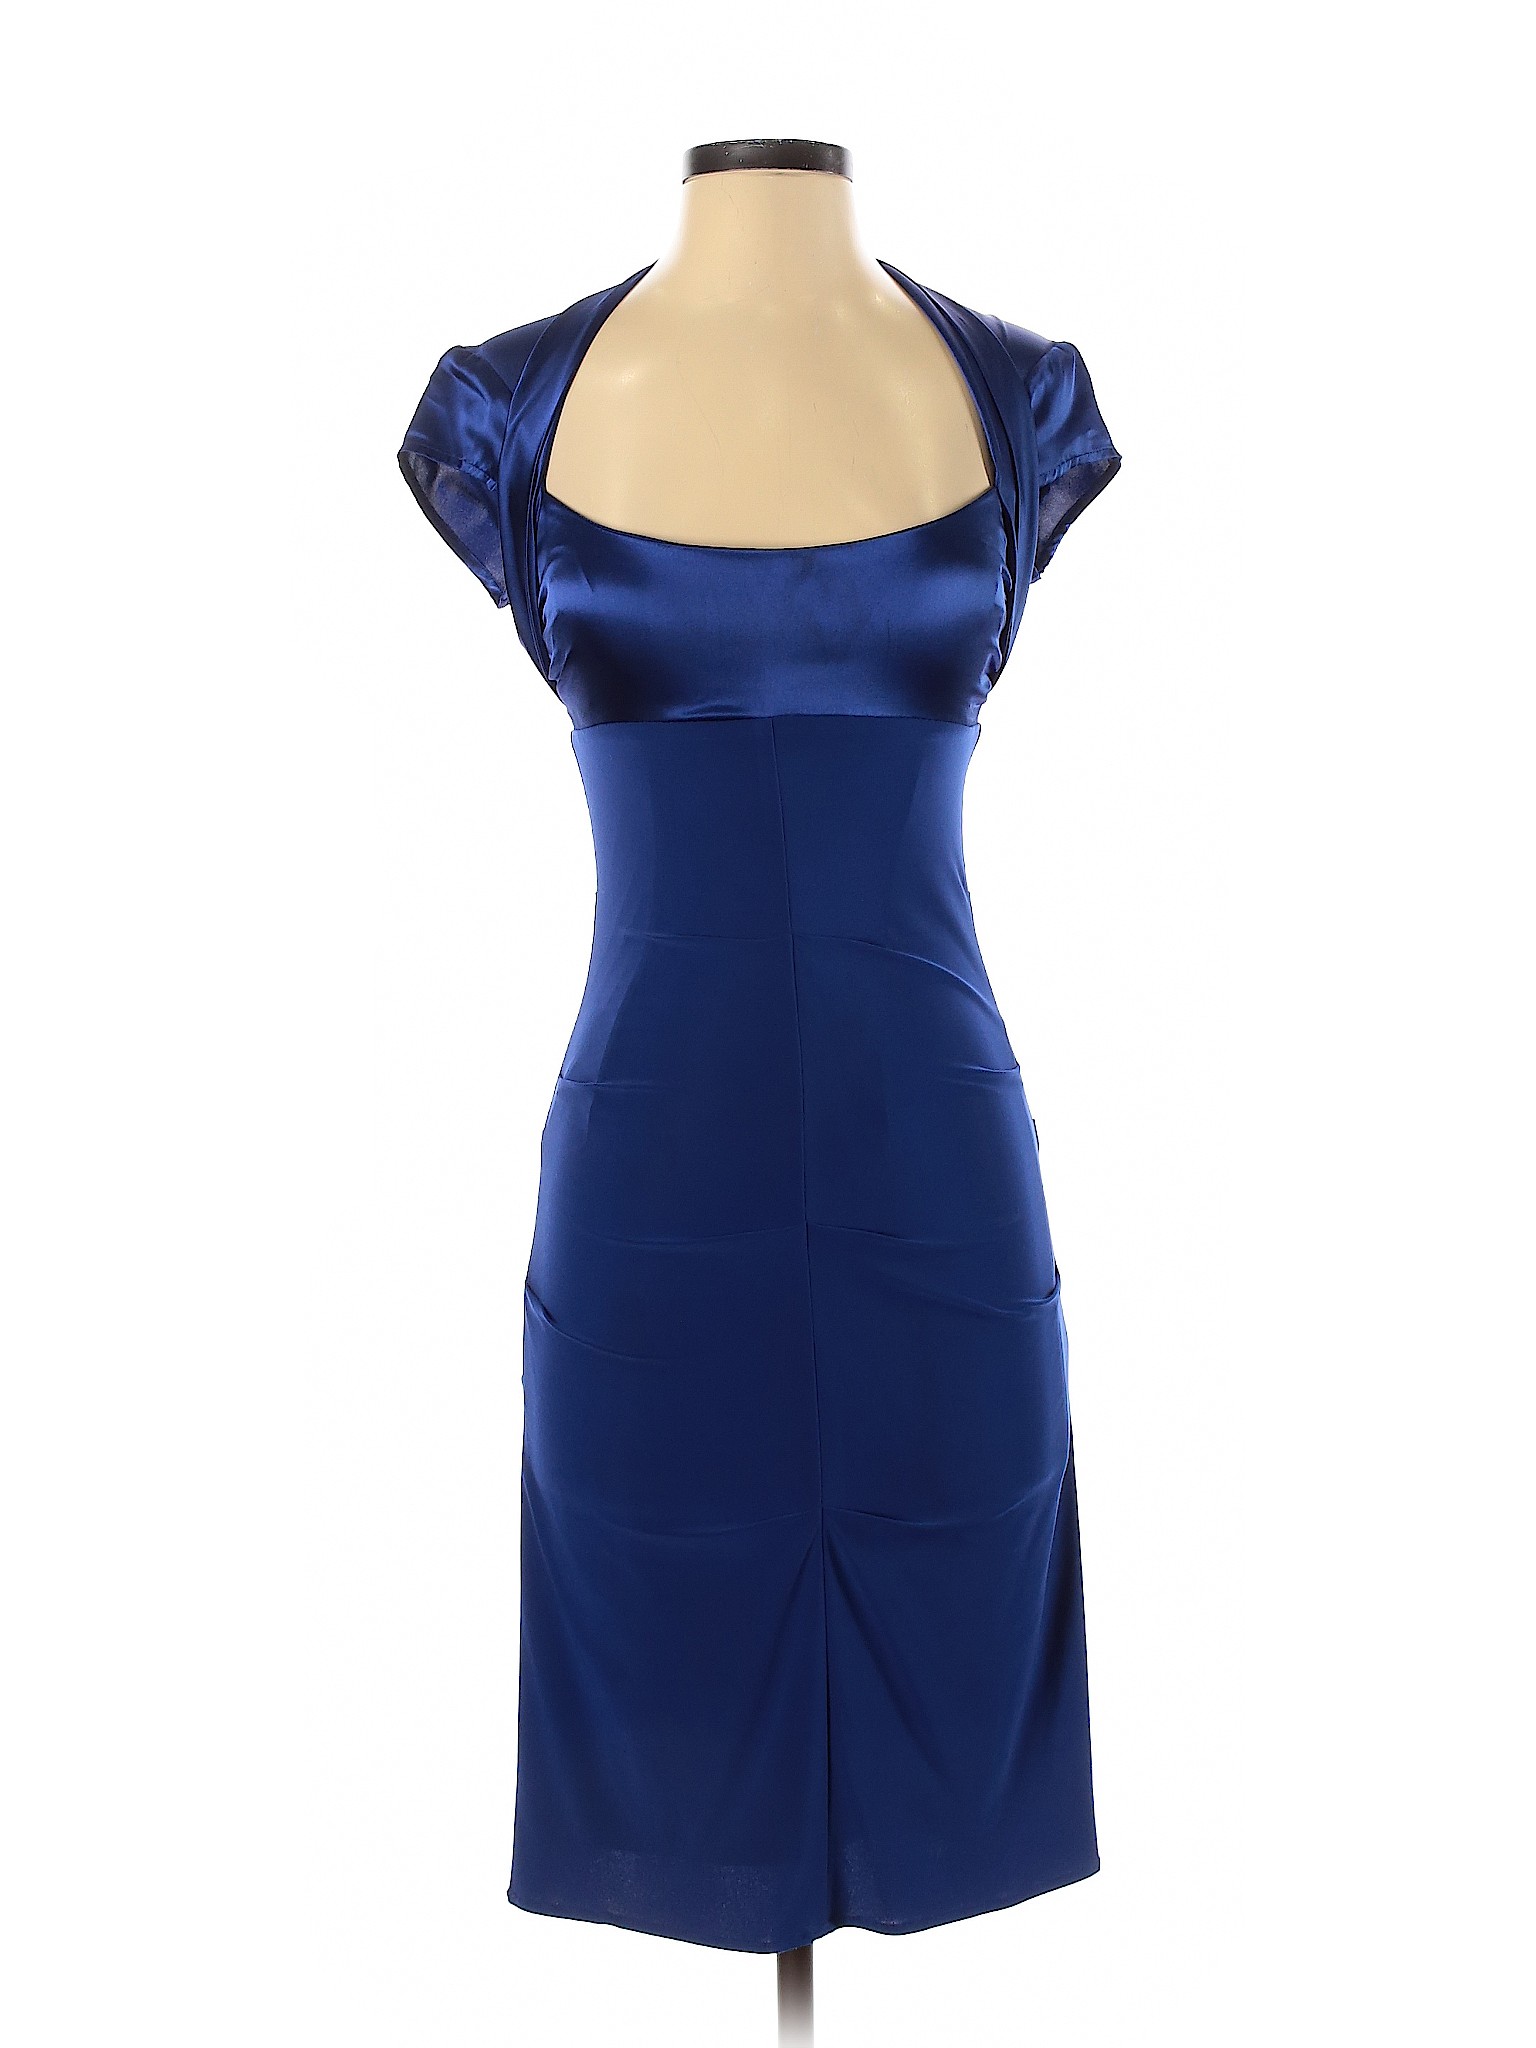 Morgan & Co. Women Blue Cocktail Dress XS | eBay